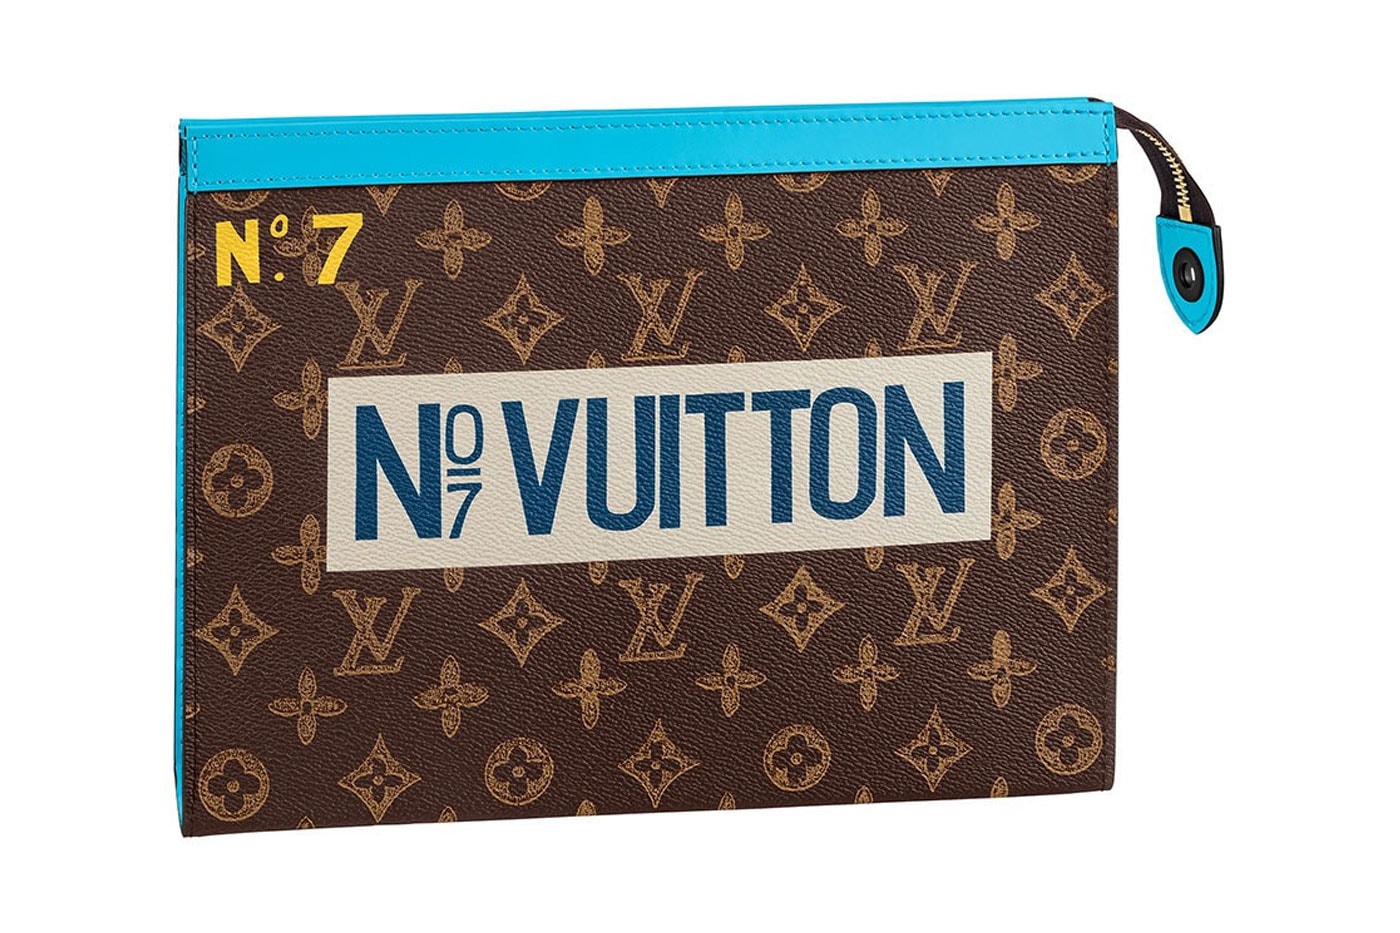 Louis Vuitton Virgil Abloh Seventh Season With New Bag Collection "7" off-white desginer lvmh accessories